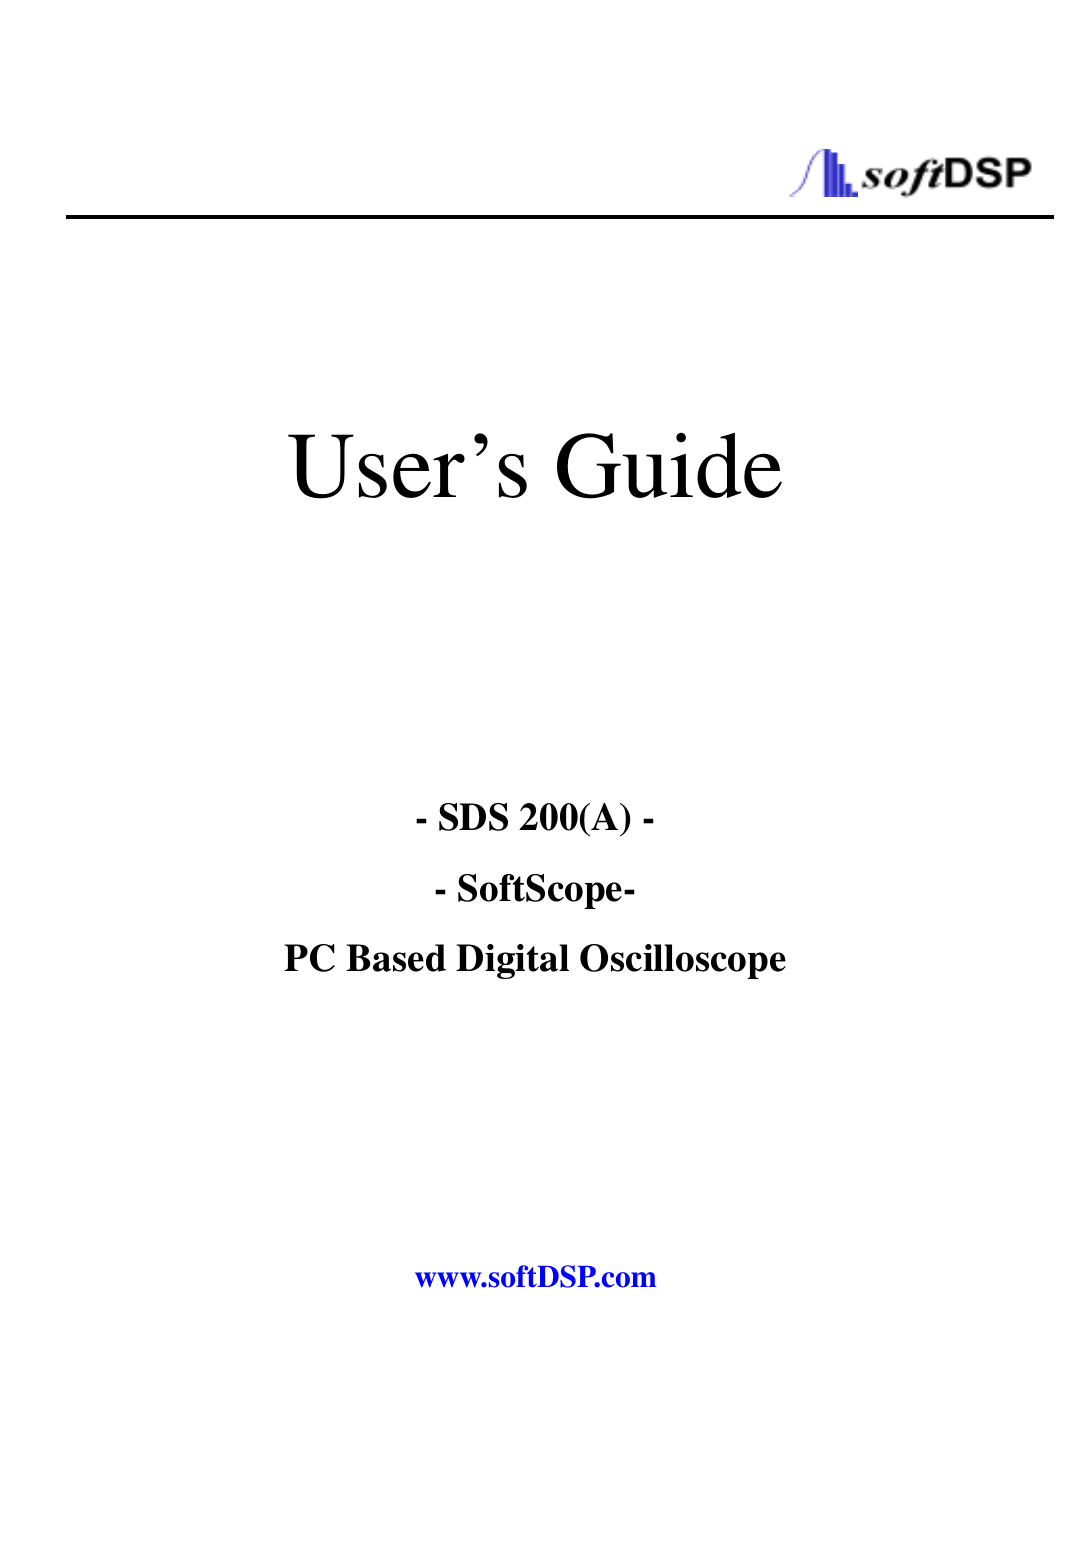       User’s Guide        - SDS 200(A) - - SoftScope- PC Based Digital Oscilloscope        www.softDSP.com  